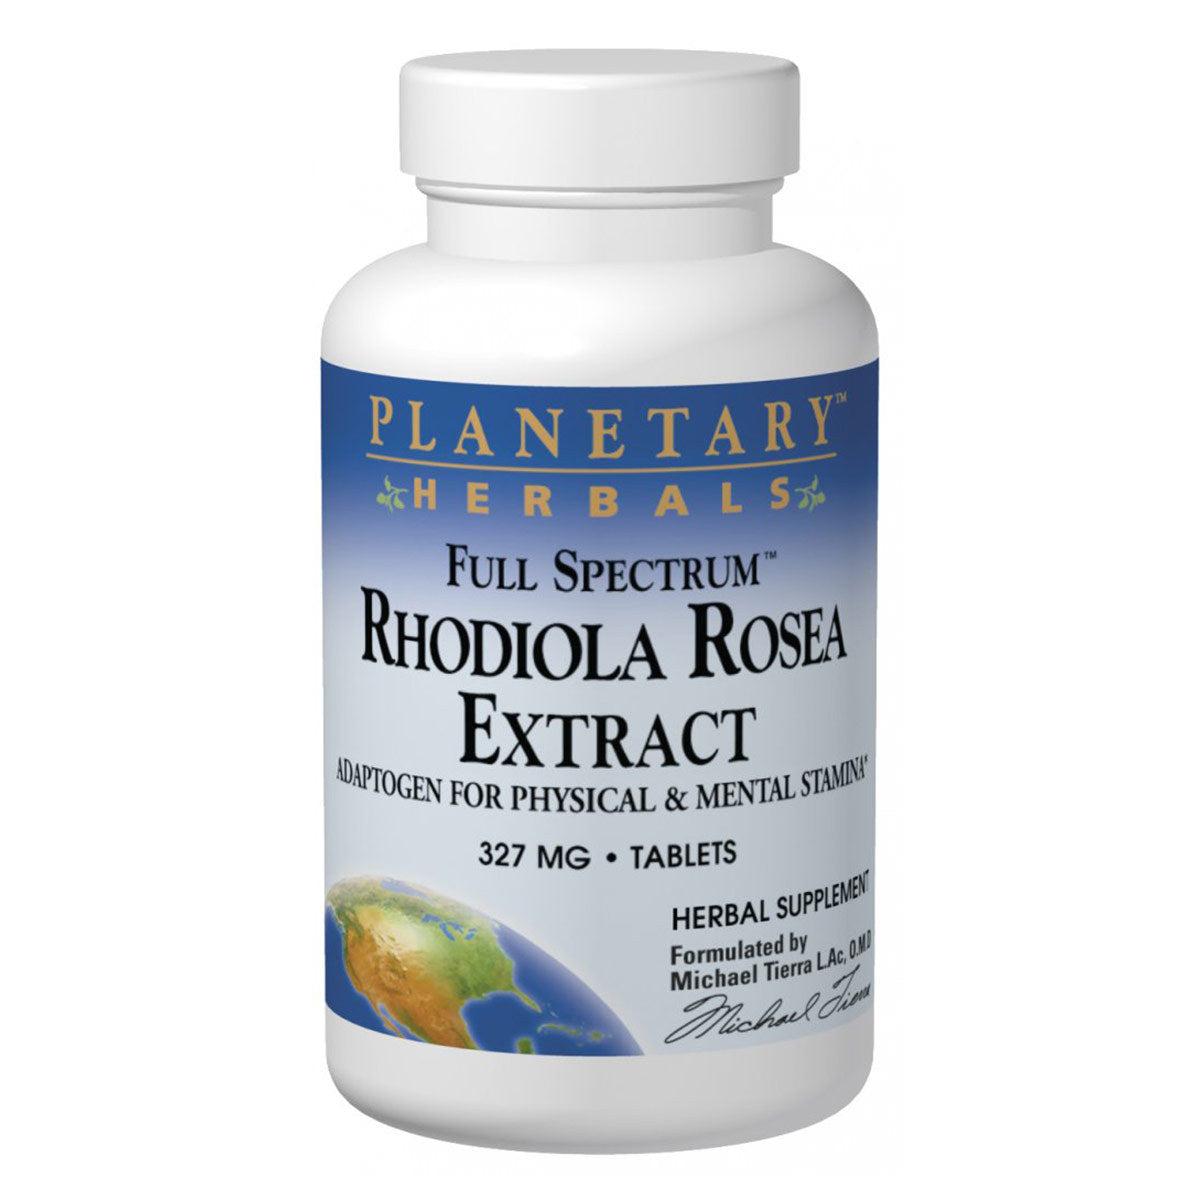 Primary image of Full Spectrum Rhodiola Rosea Extract